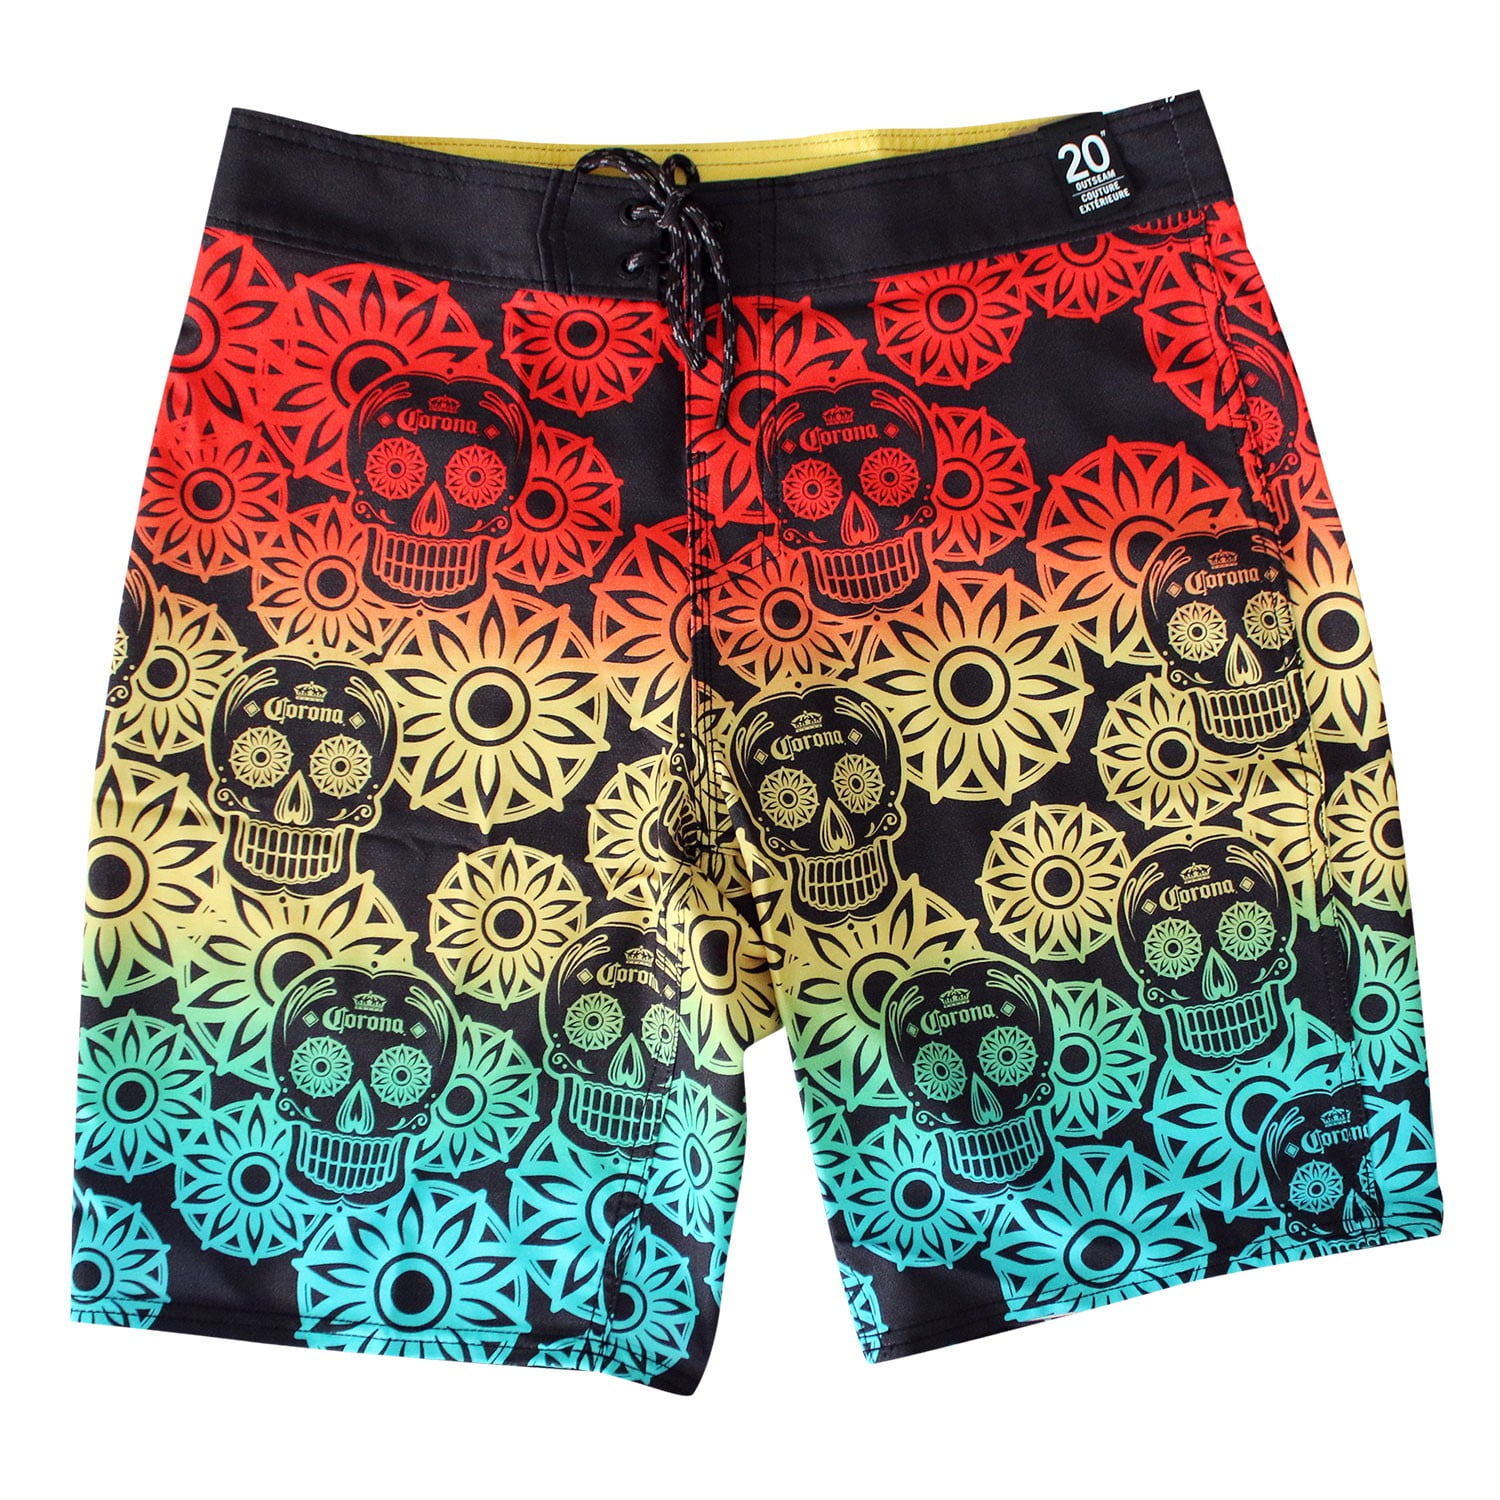 Stylish Swim Shorts for Men Day of The Dead-Sugar Skull Swimming Trunks Ultra Mens Beach Shorts Swimwear 